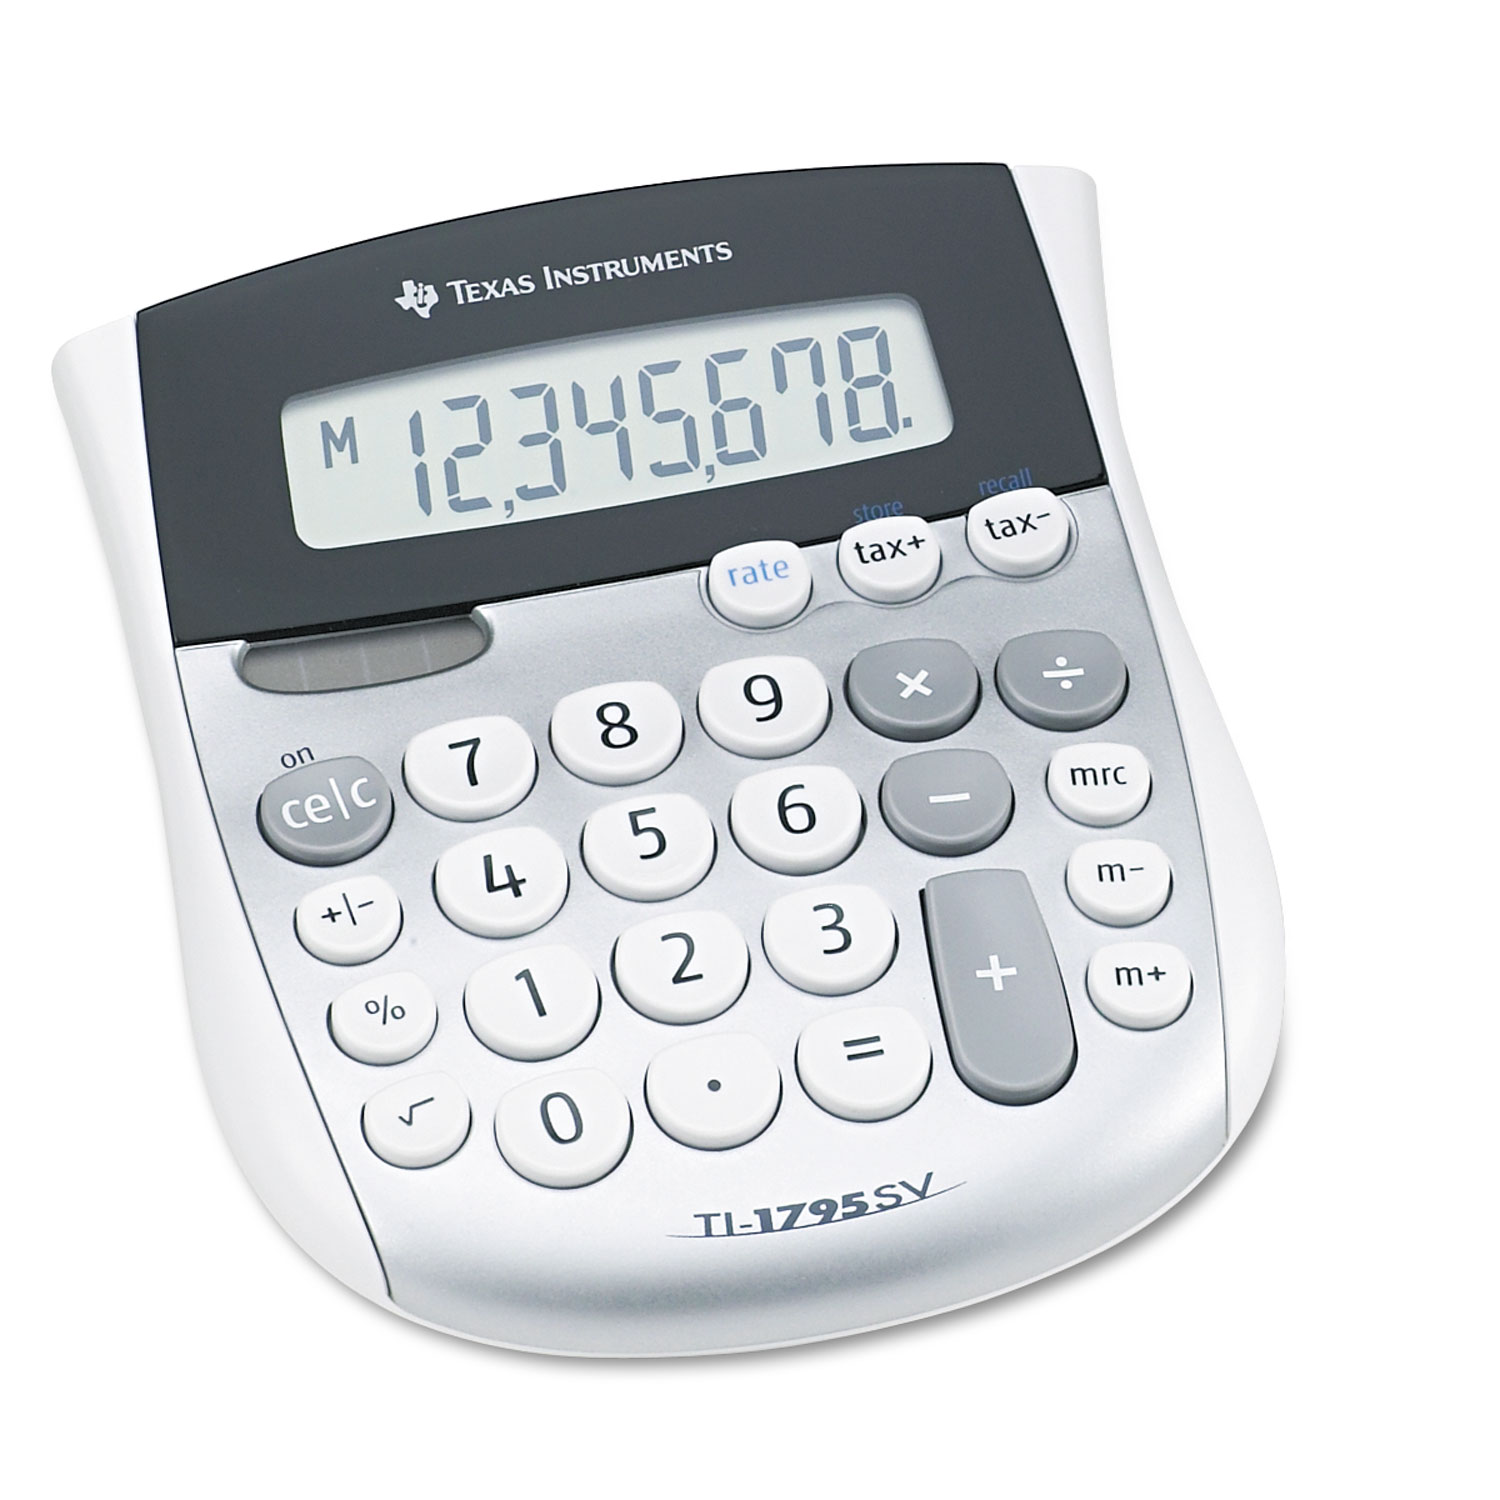  Texas Instruments TI-1795SV TI-1795SV Minidesk Calculator, 8-Digit LCD (TEXTI1795SV) 